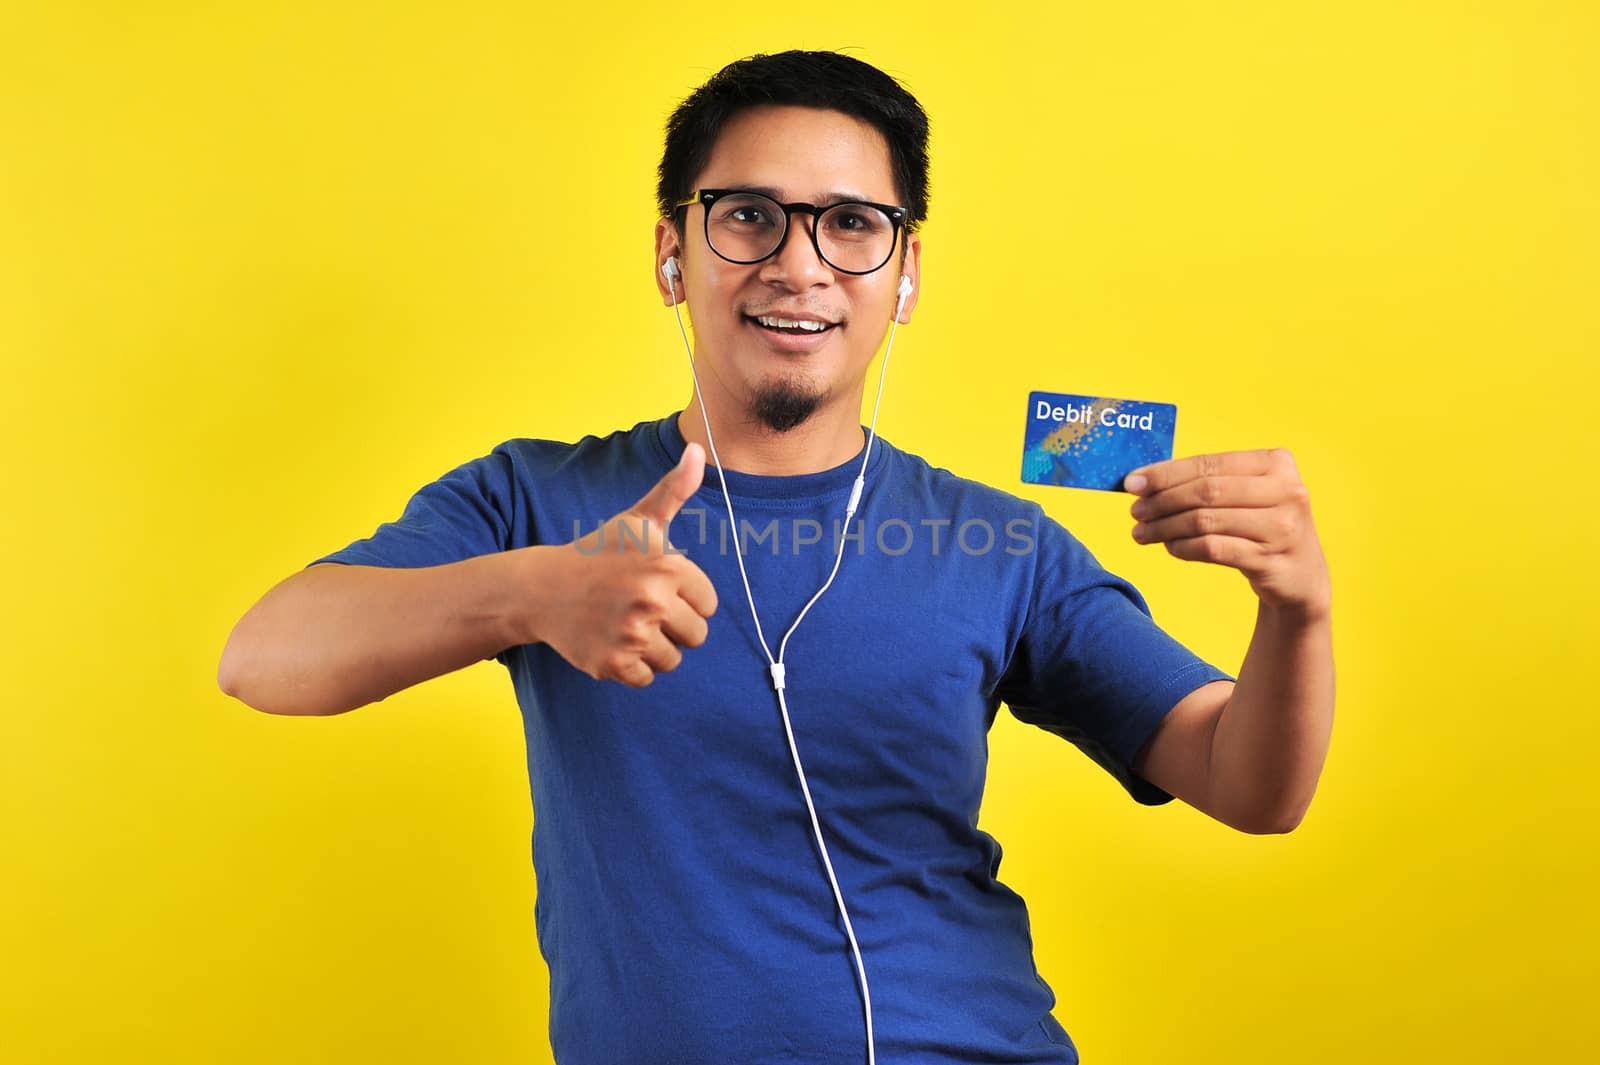 Young Asian man love his debit card. Shopping online by heruan1507